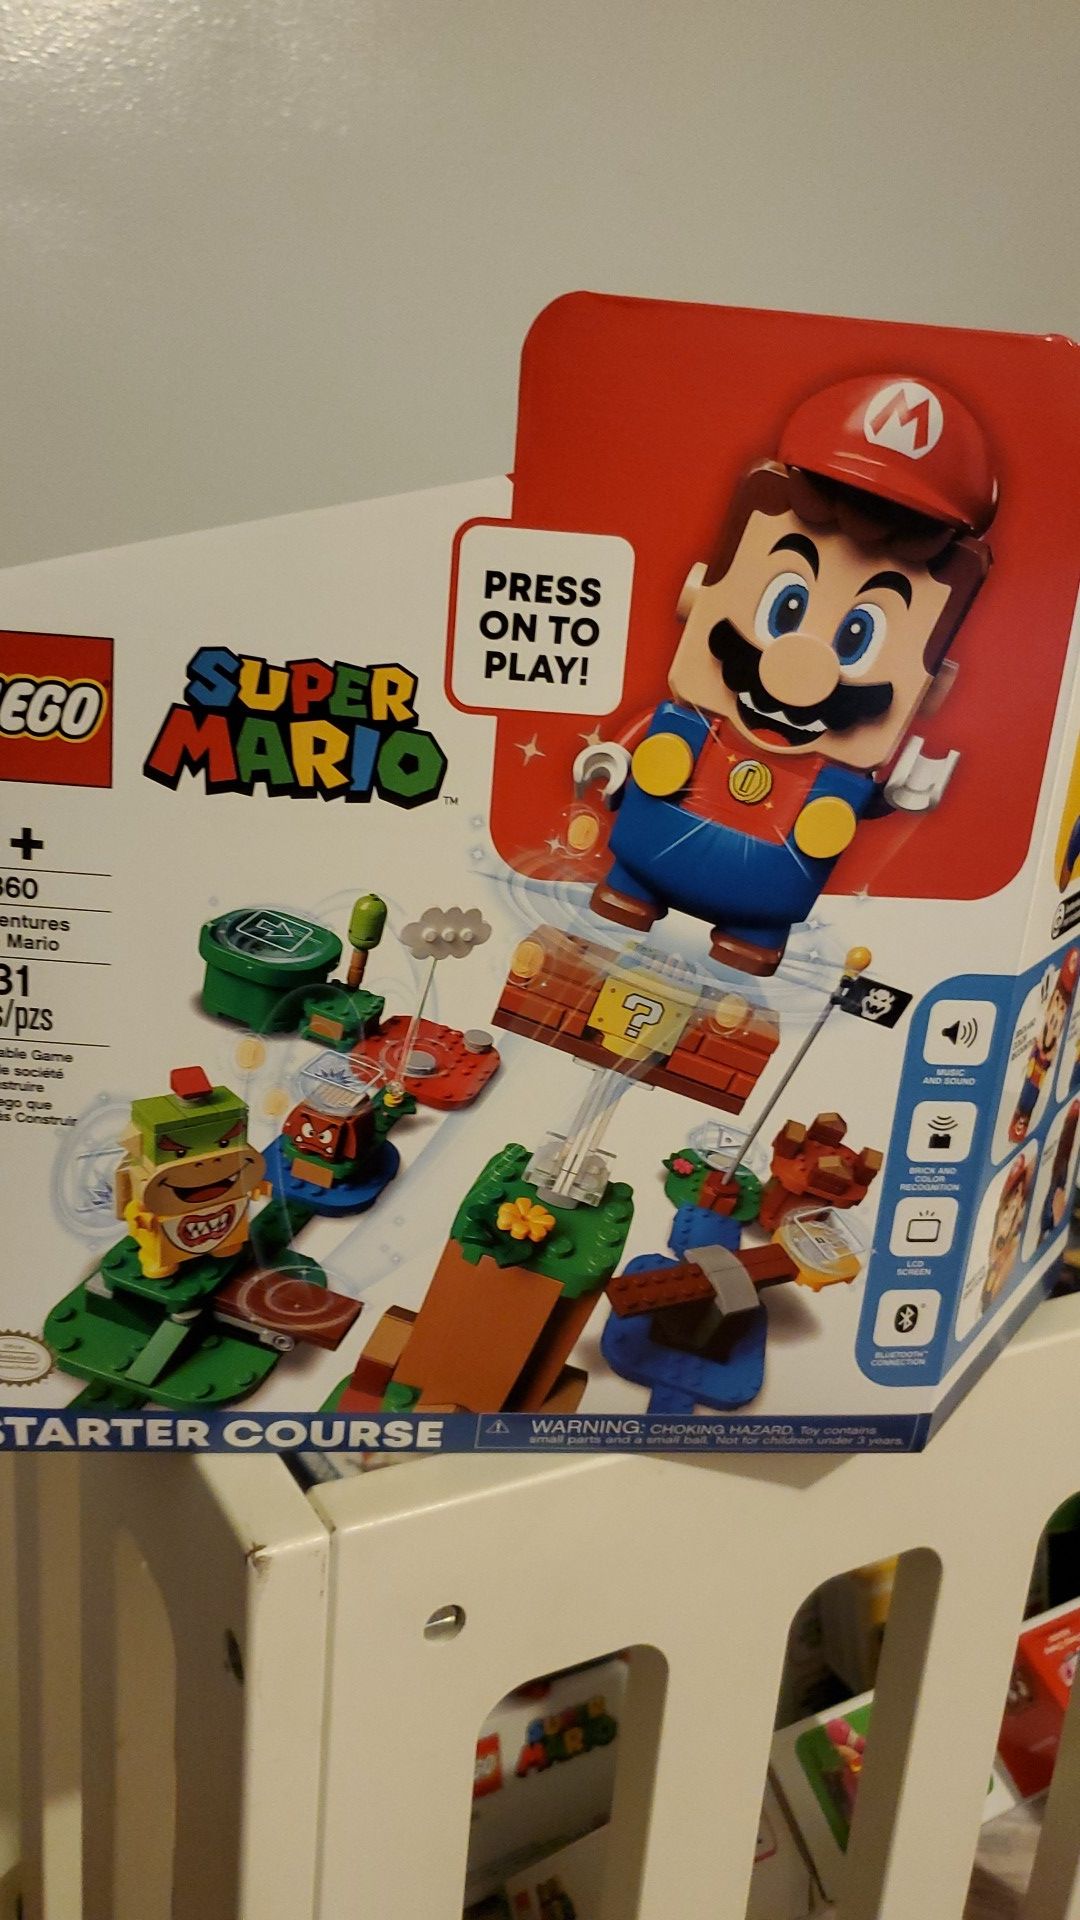 Mario stater course